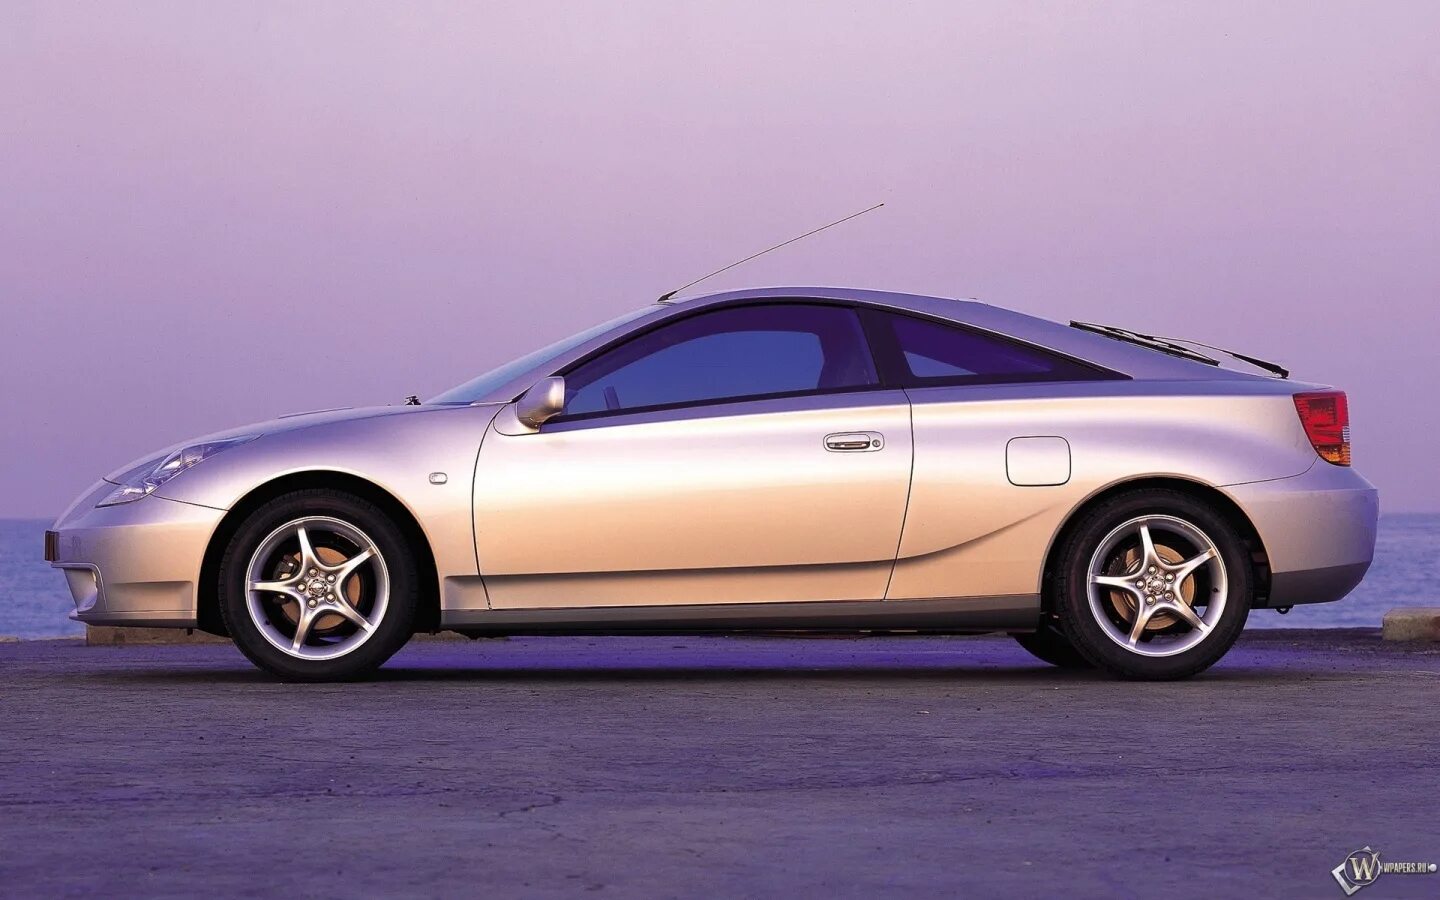 2000 х 8. Toyota Celica 1999. Toyota Celica 2000. 1999 Toyota Celica 1.8 MT. Toyota Celica gt 1999.